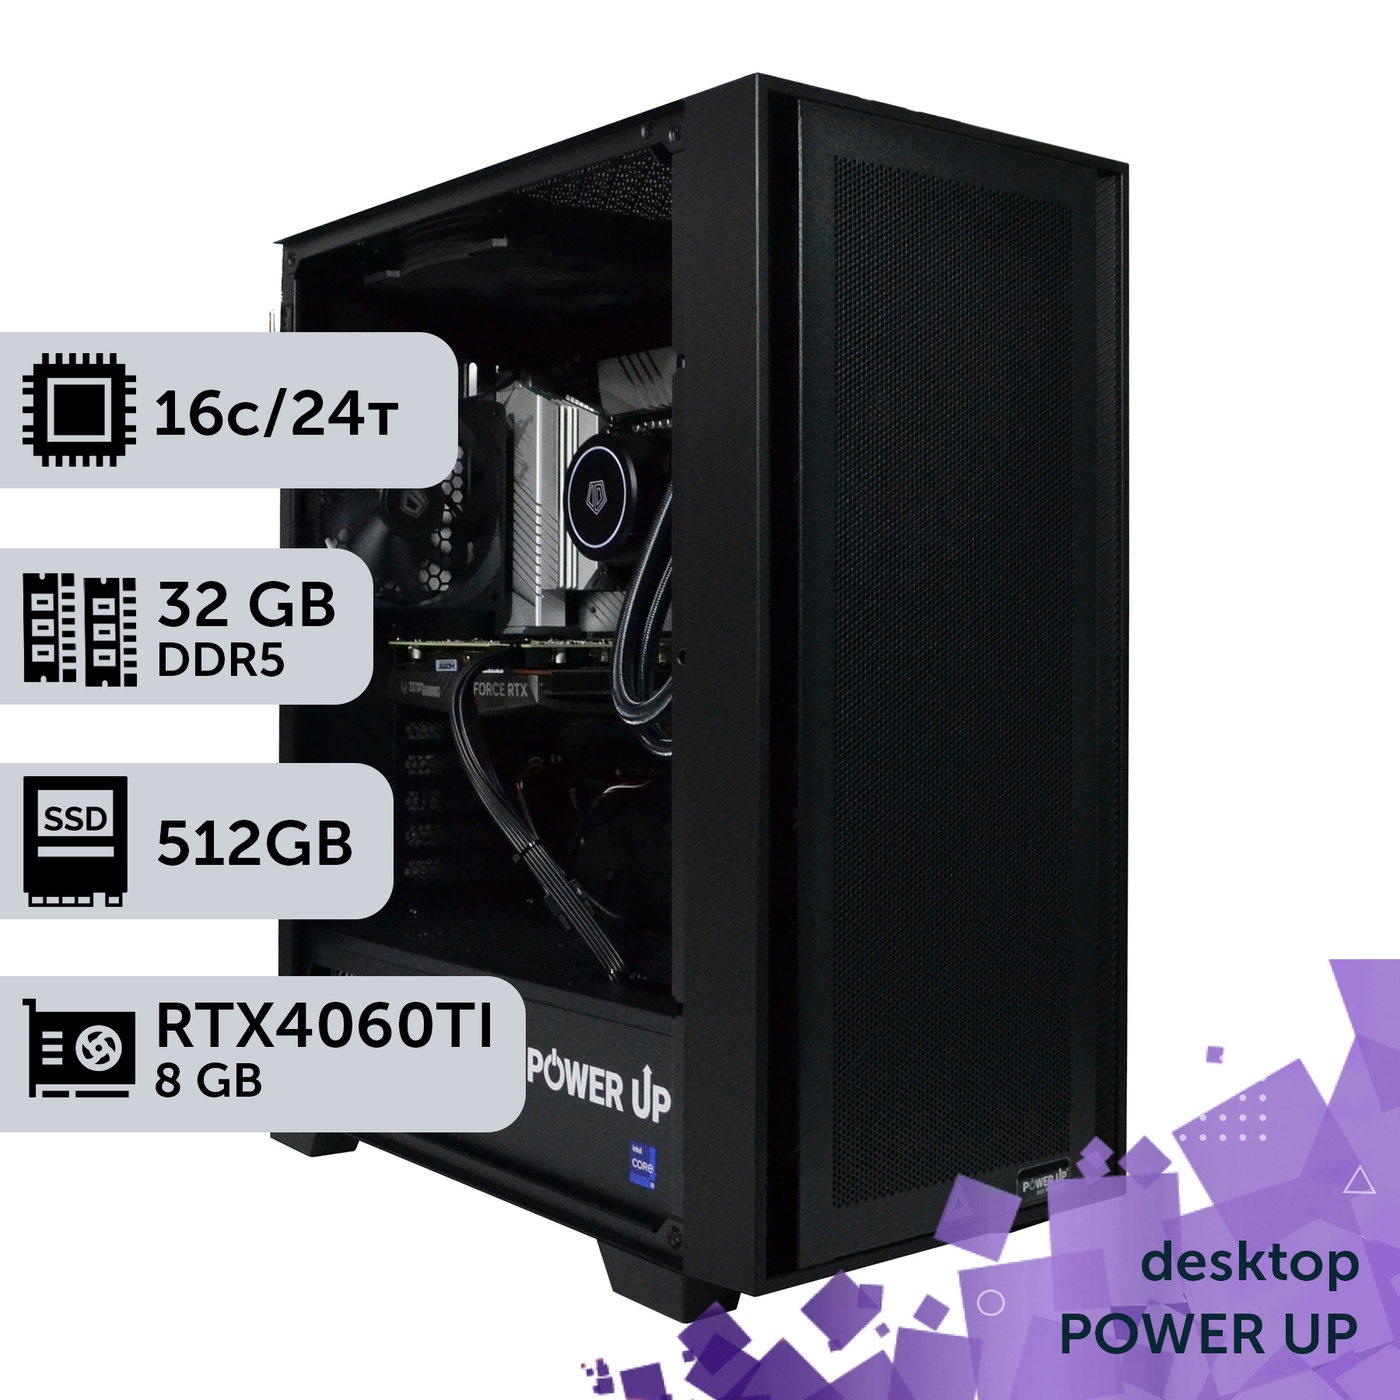 Рабочая станция PowerUp Desktop #272 Core i7 13700K/32 GB/SSD 512GB/GeForce RTX 4060Ti 8GB